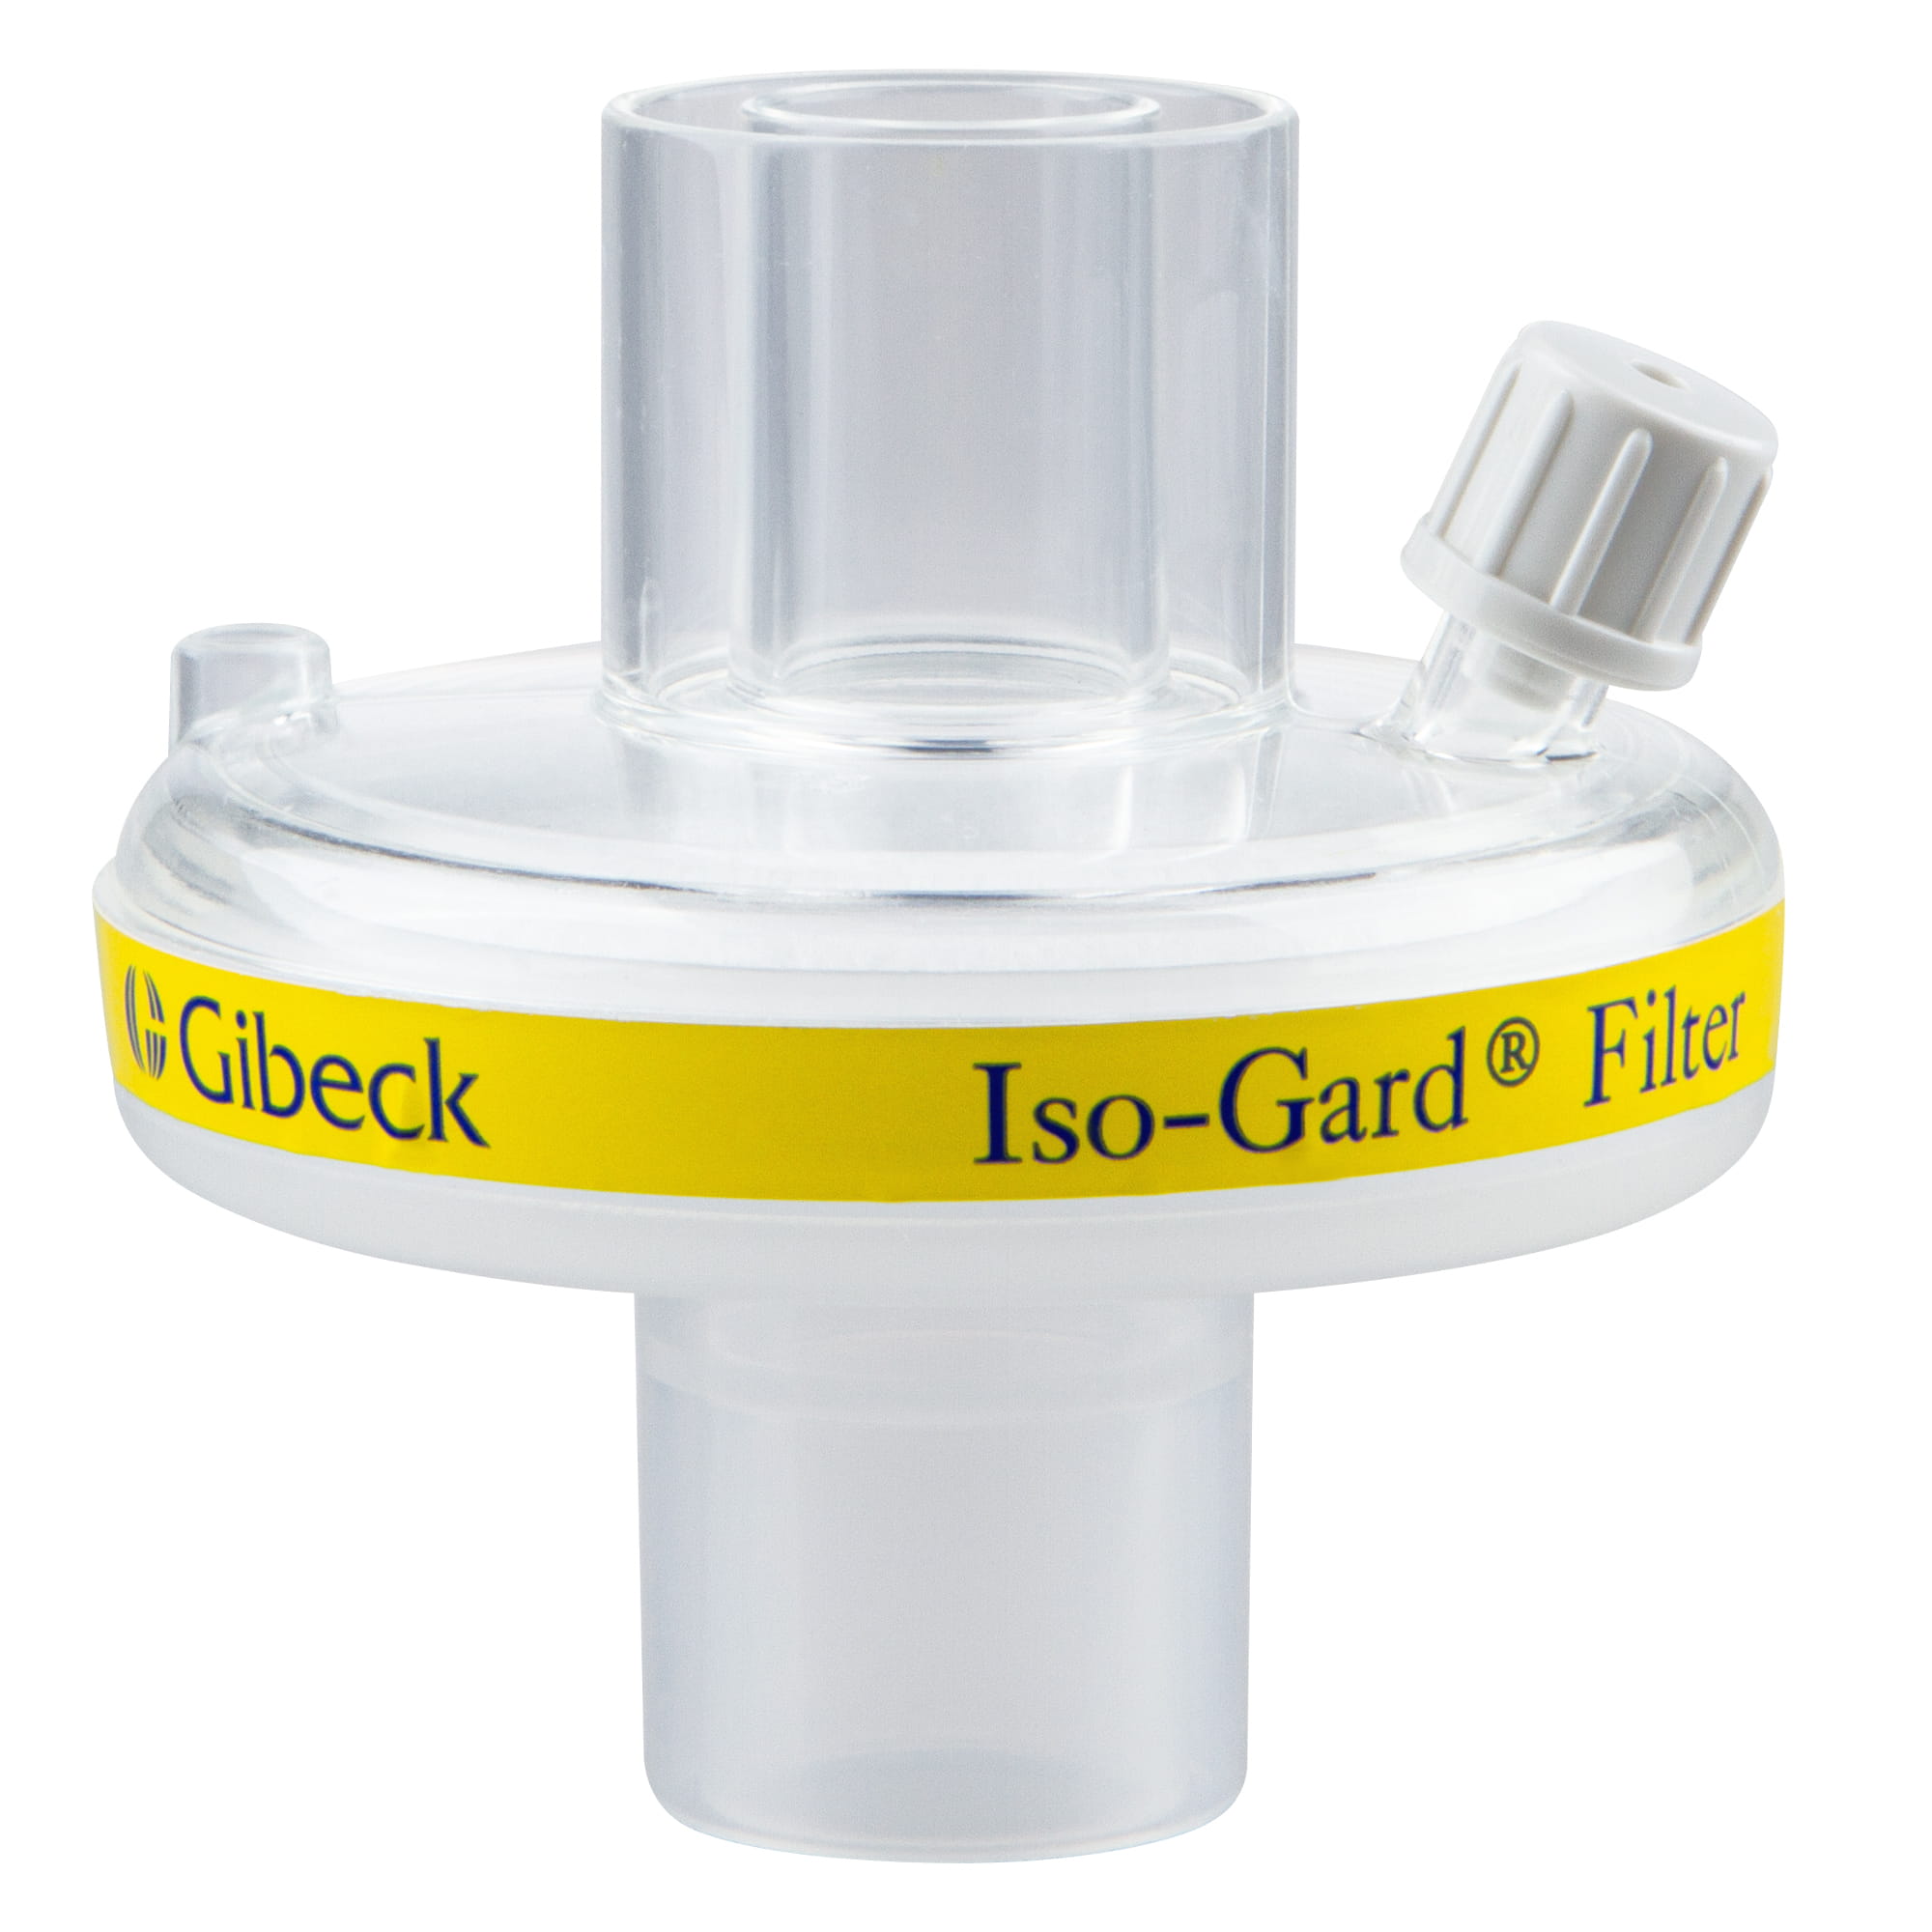 Gibeck Iso-Gard Filter gerade steril Bakterien- und Virenfilter